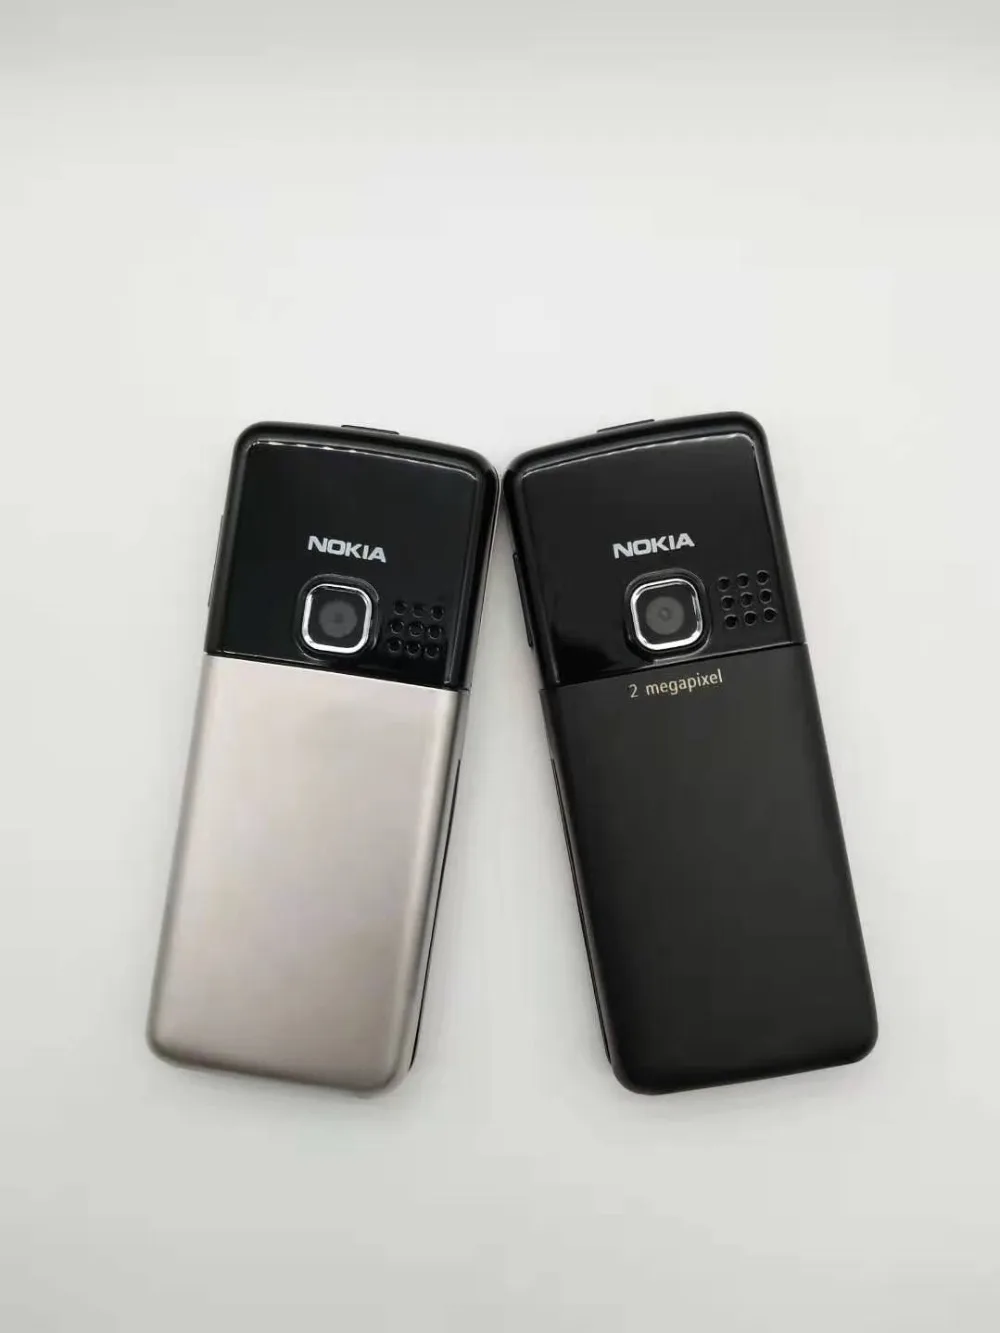 Nokia 6300 Refurbished-Original Unlocked  5MP GSM Support Russian&Arabic Keyboard Mobile Phone Tri-Band Multi-language